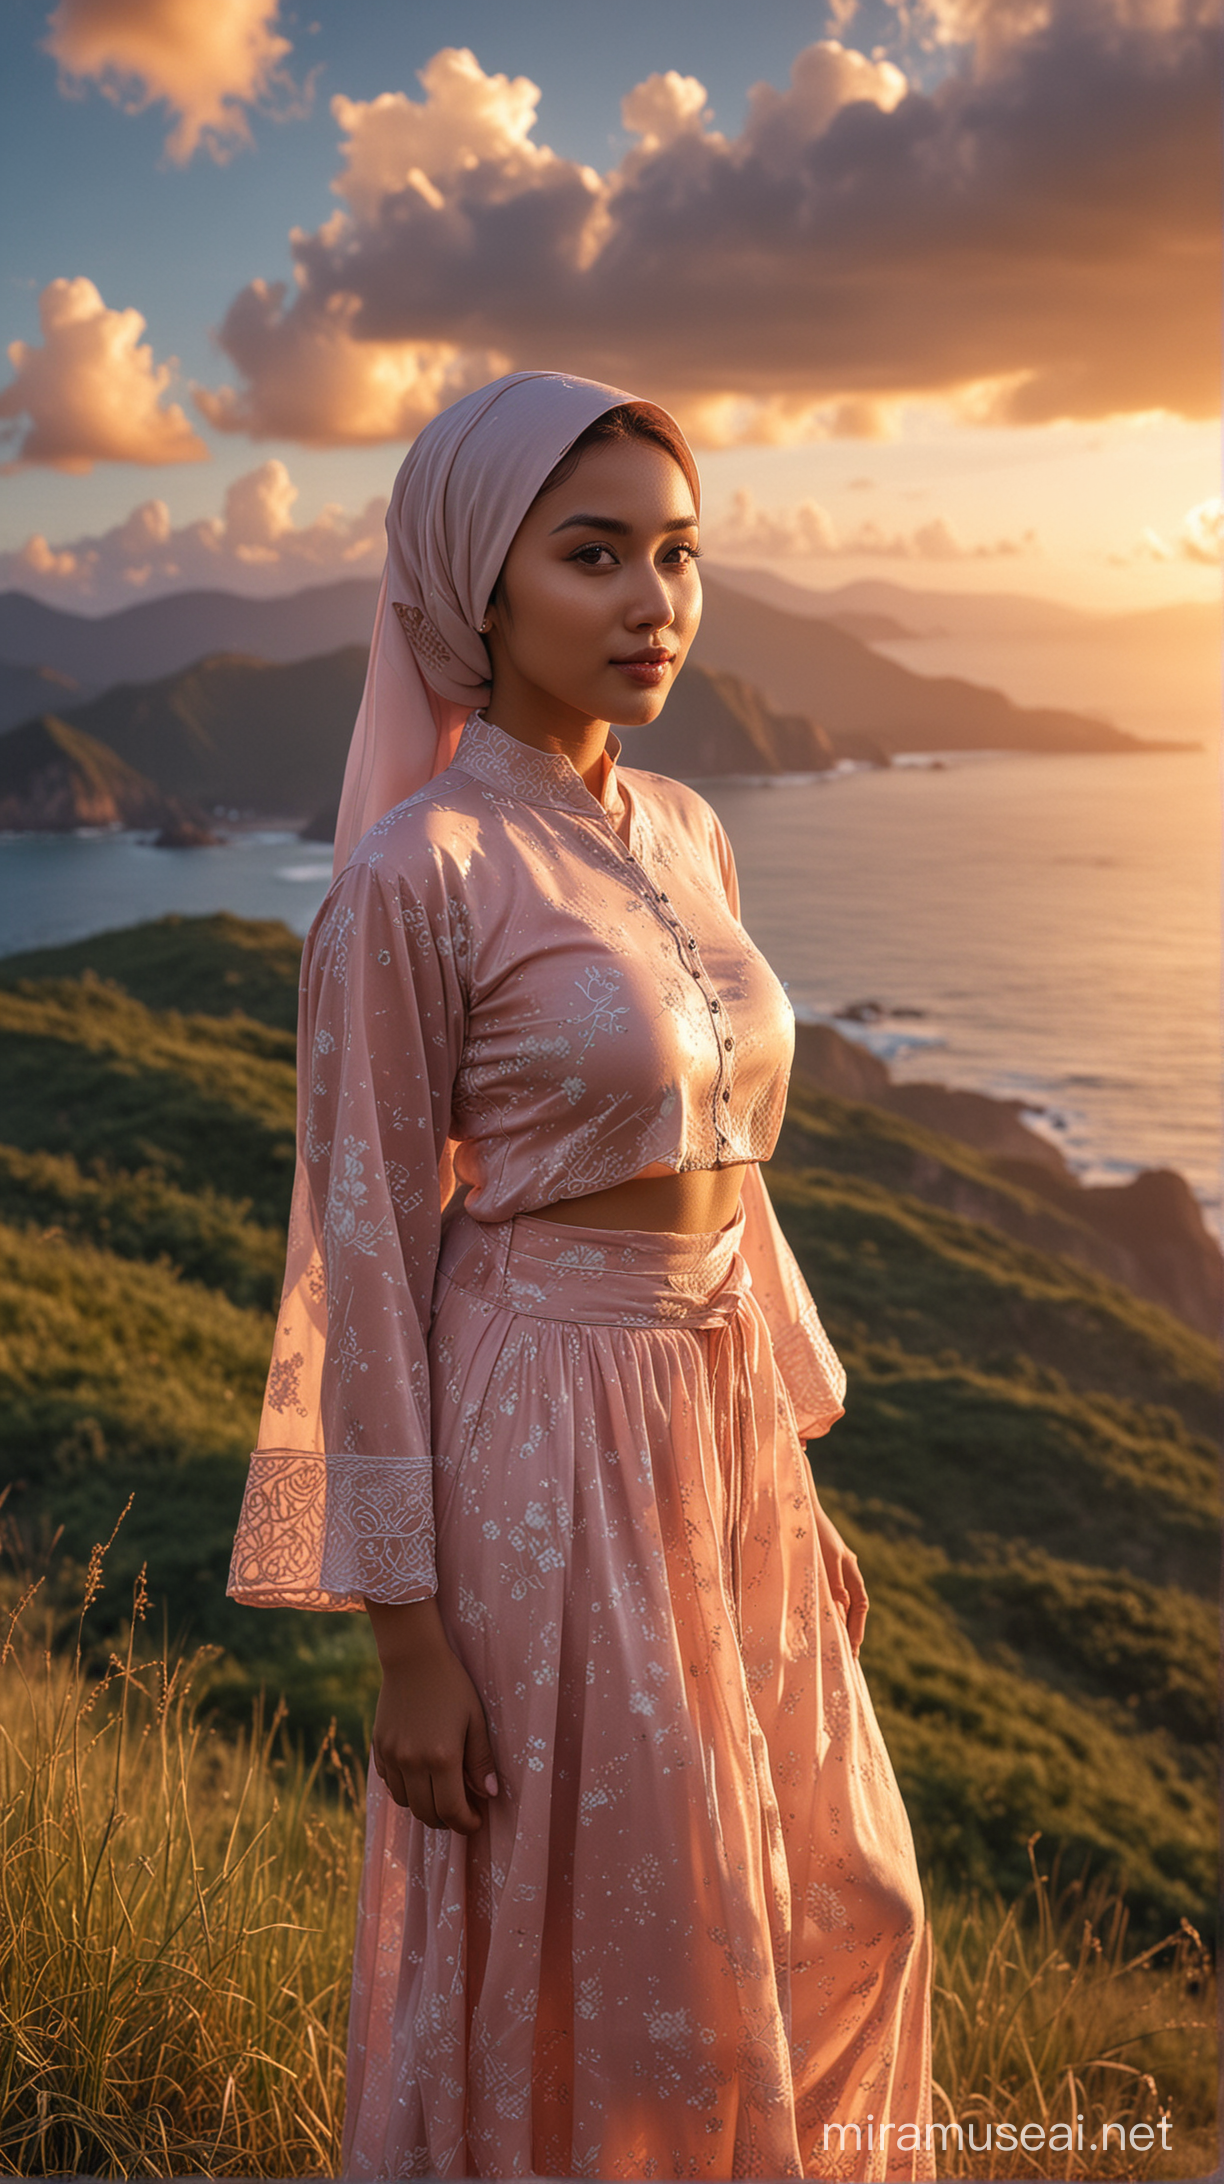 Beautiful Malaysian Woman in Hijab Overlooking Sunset Ocean View